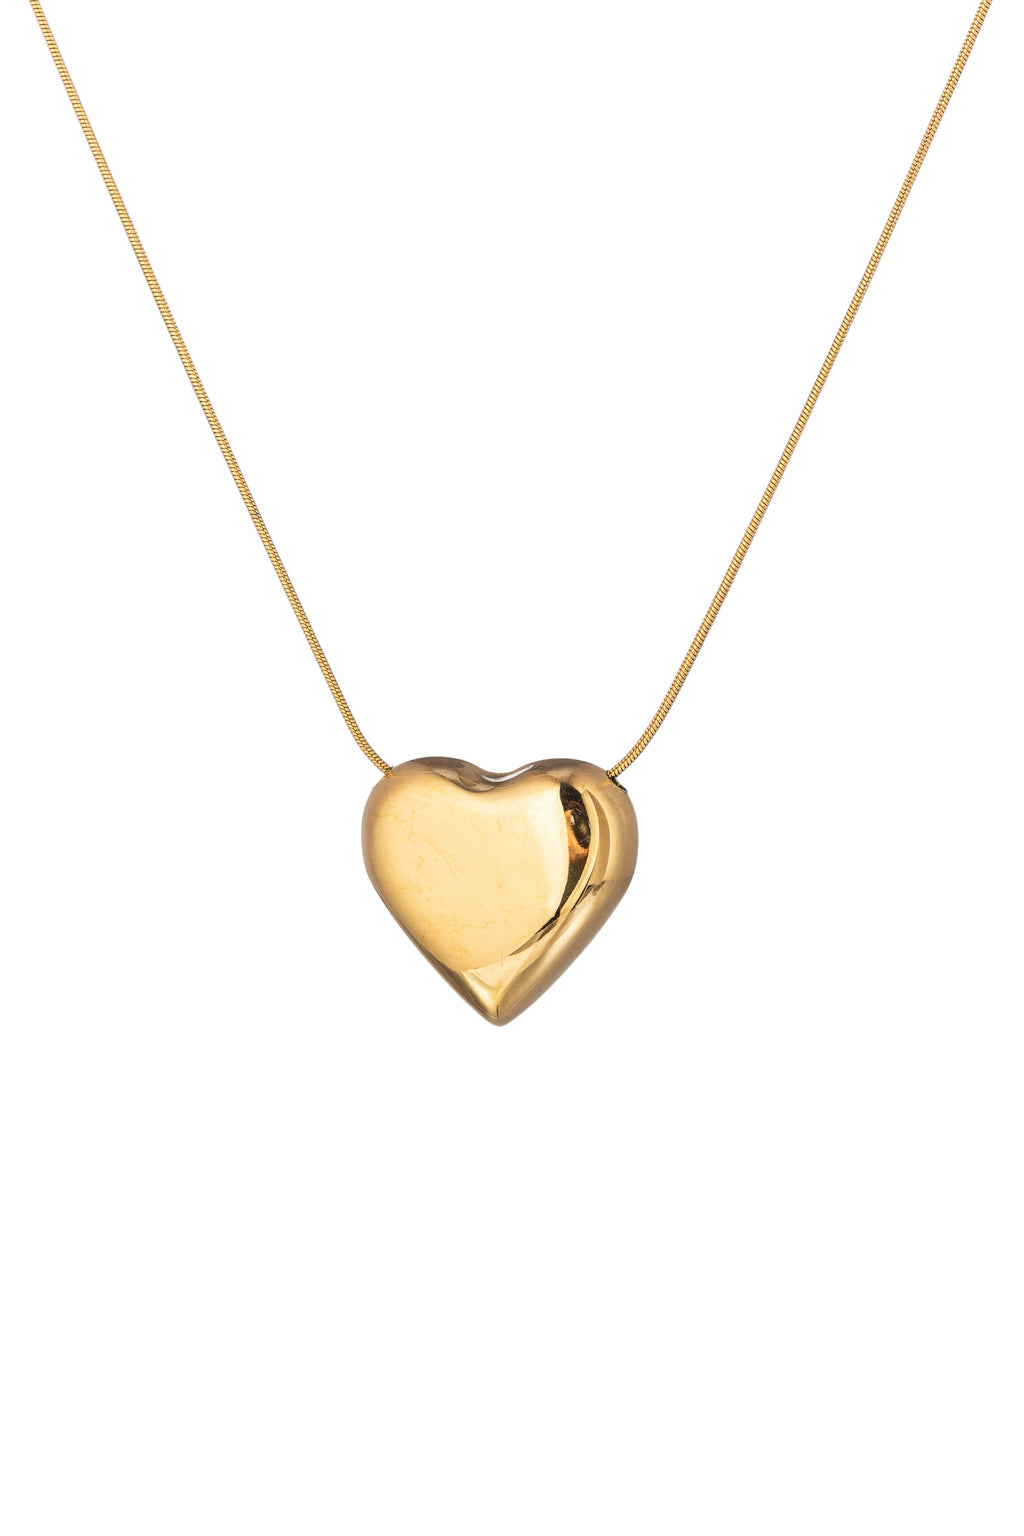 Gold tone titanium super heart pendant necklace.